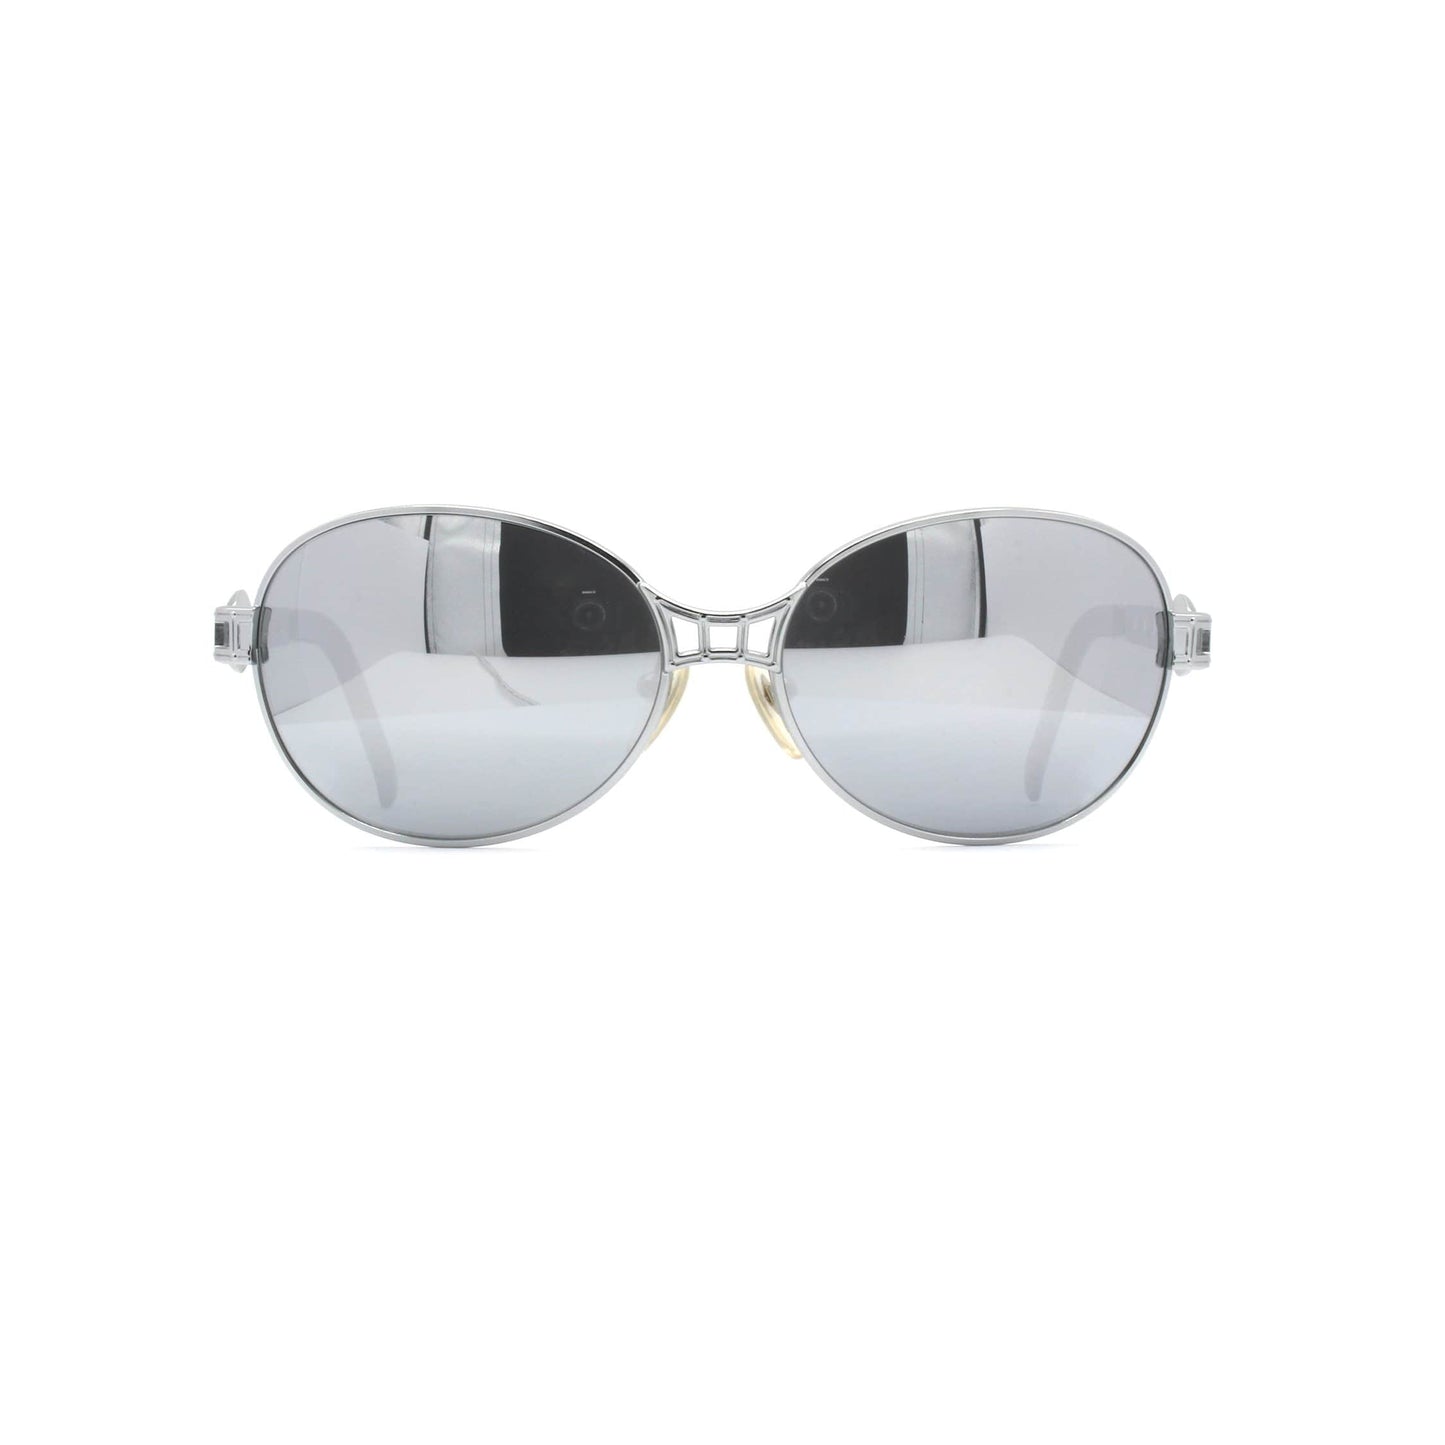 Silver Vintage Jean Paul Gaultier 58-6112 Sunglasses RSTKD Vintage